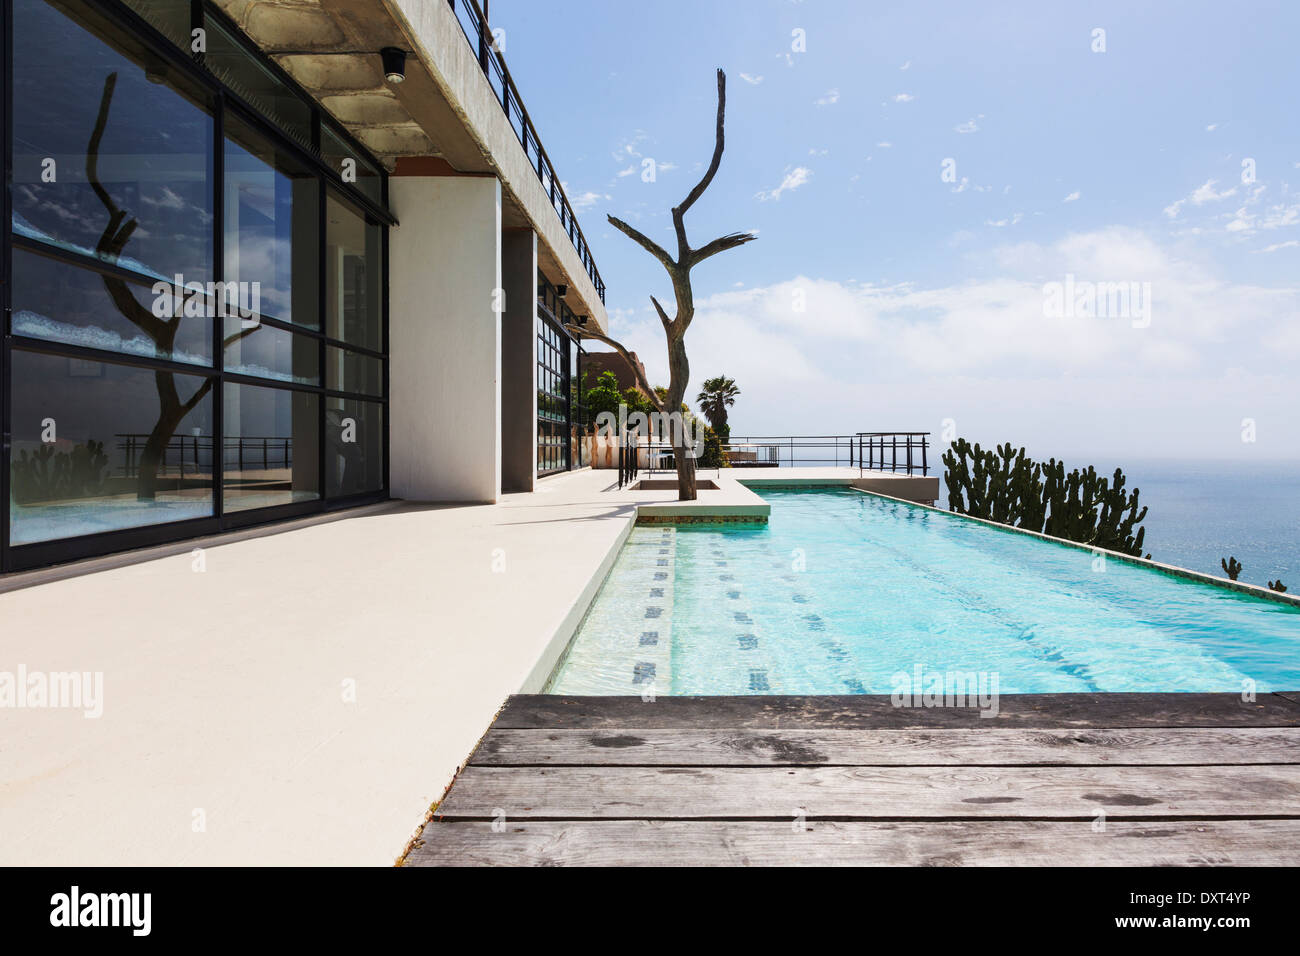 Luxury lap pool overlooking ocean Stock Photo